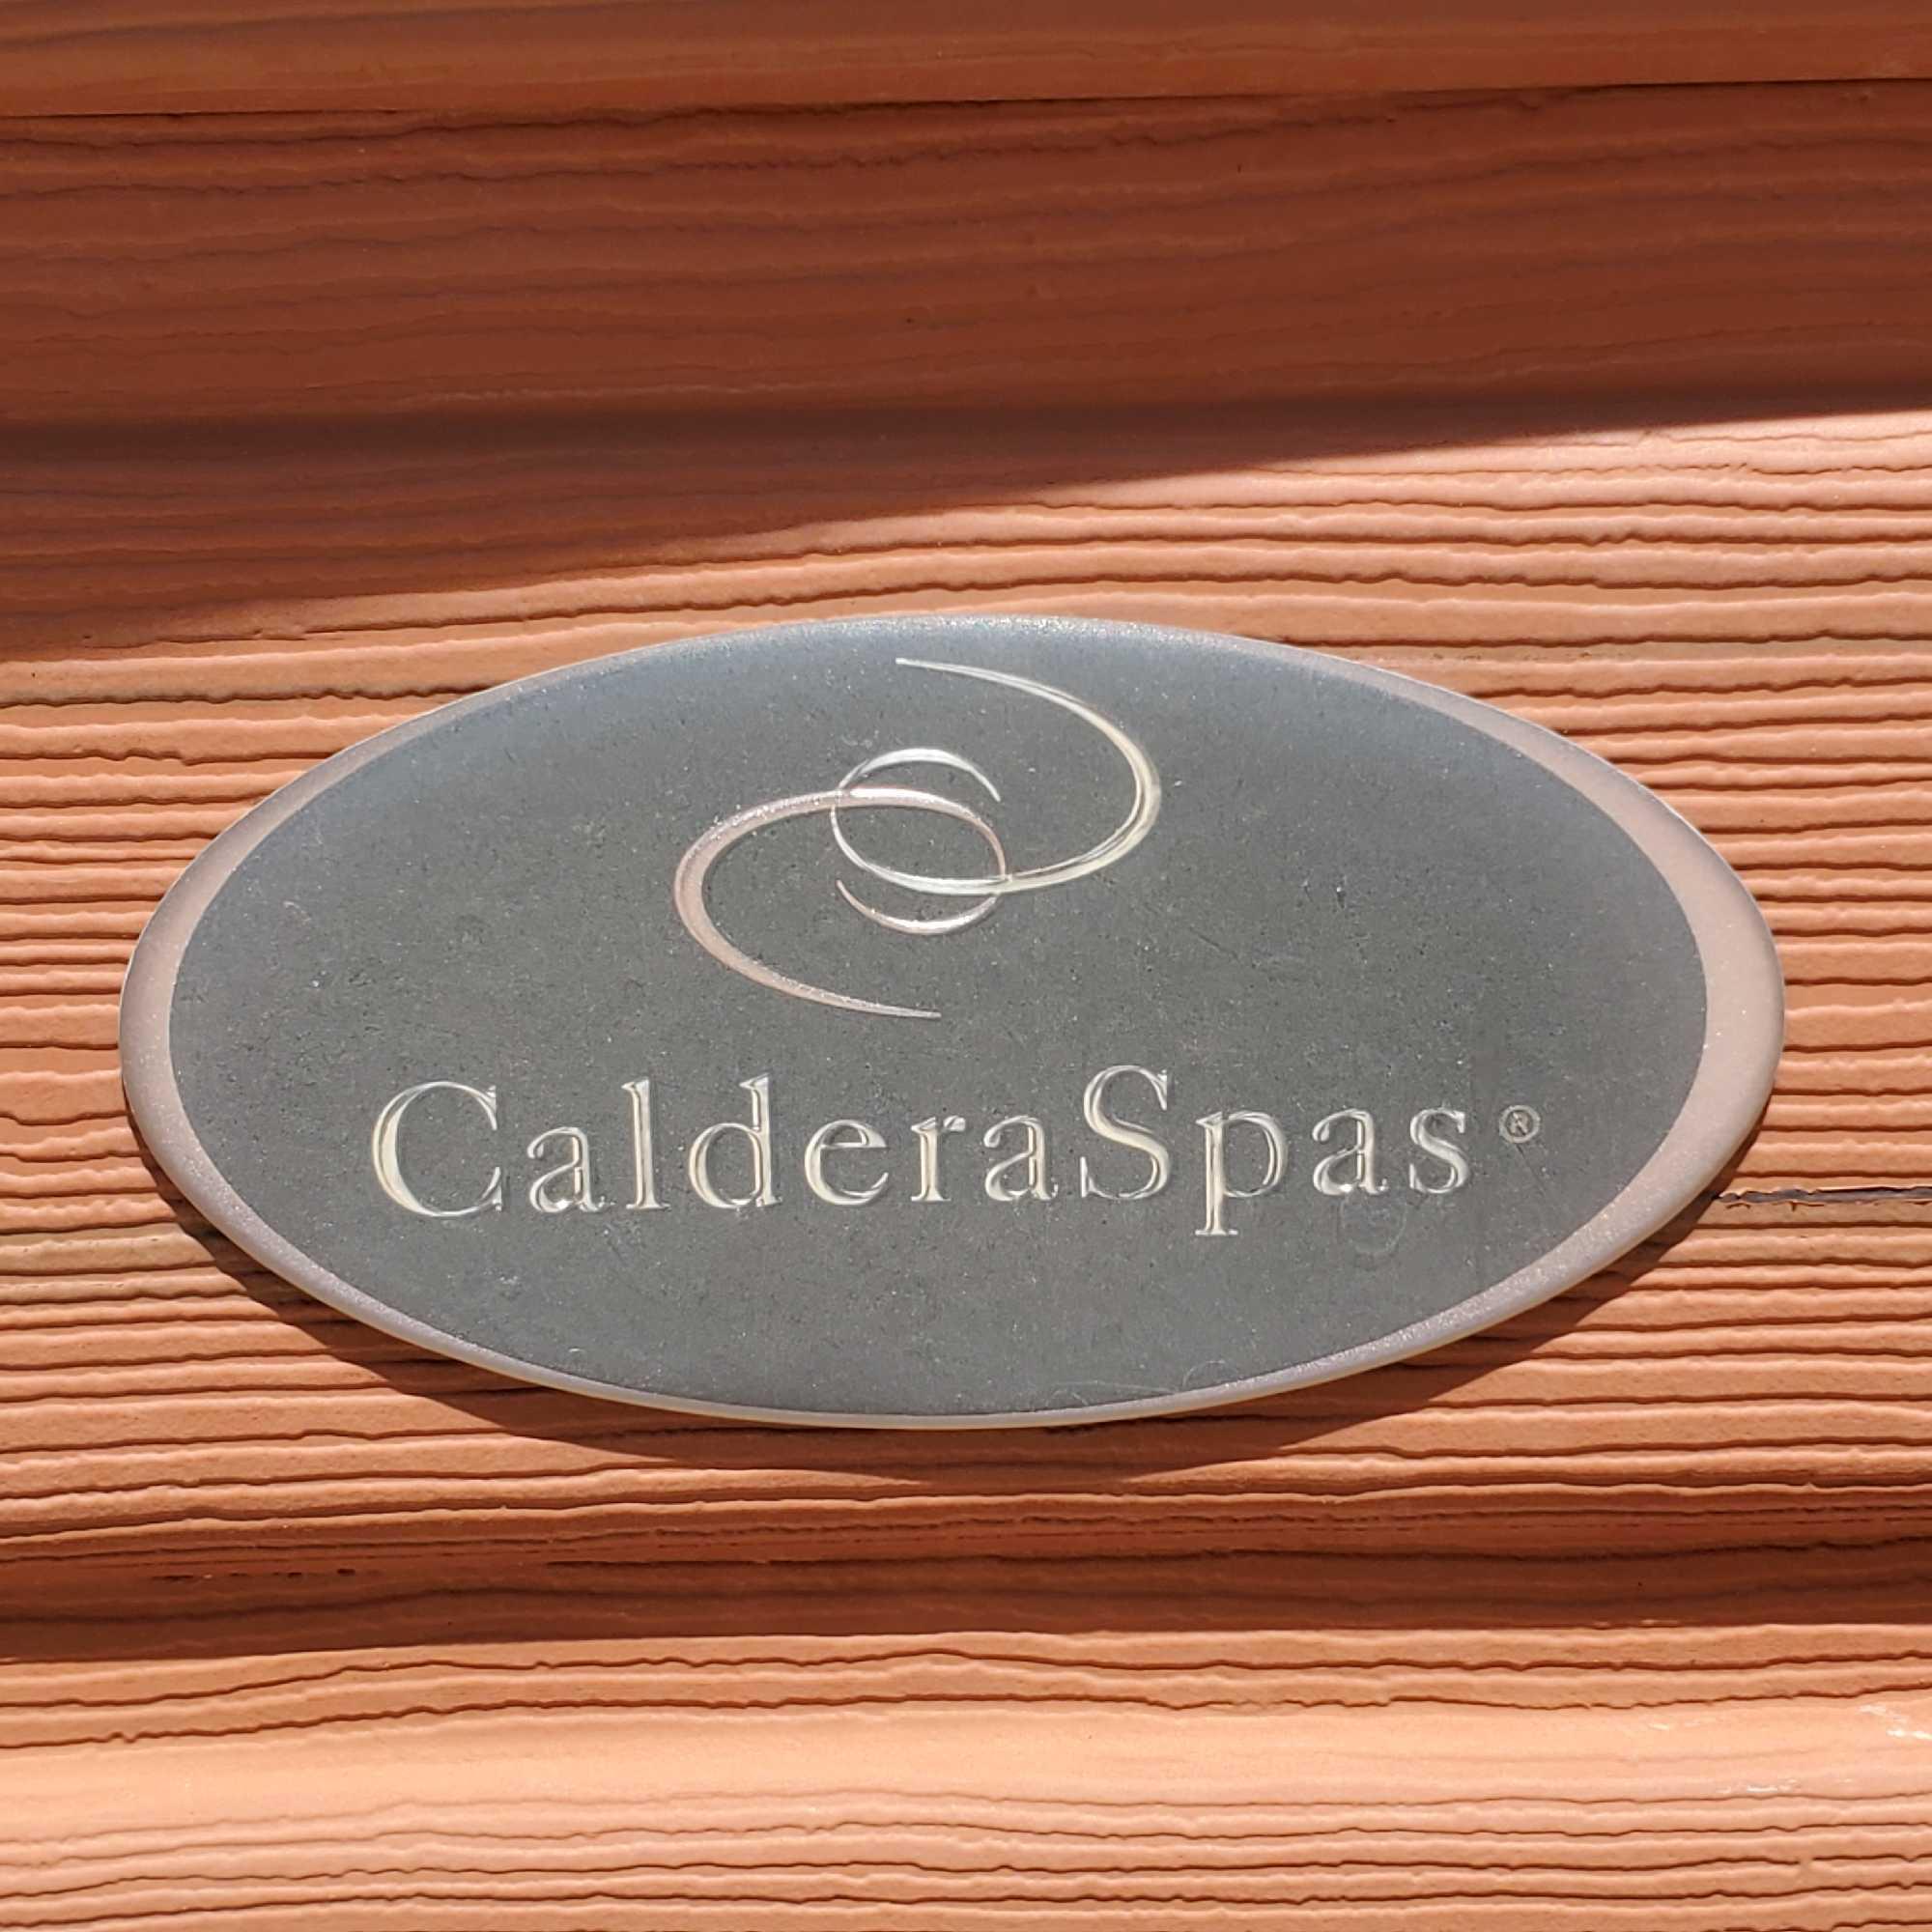 Caldera Spa/hot tub jacuzzi @ FARM